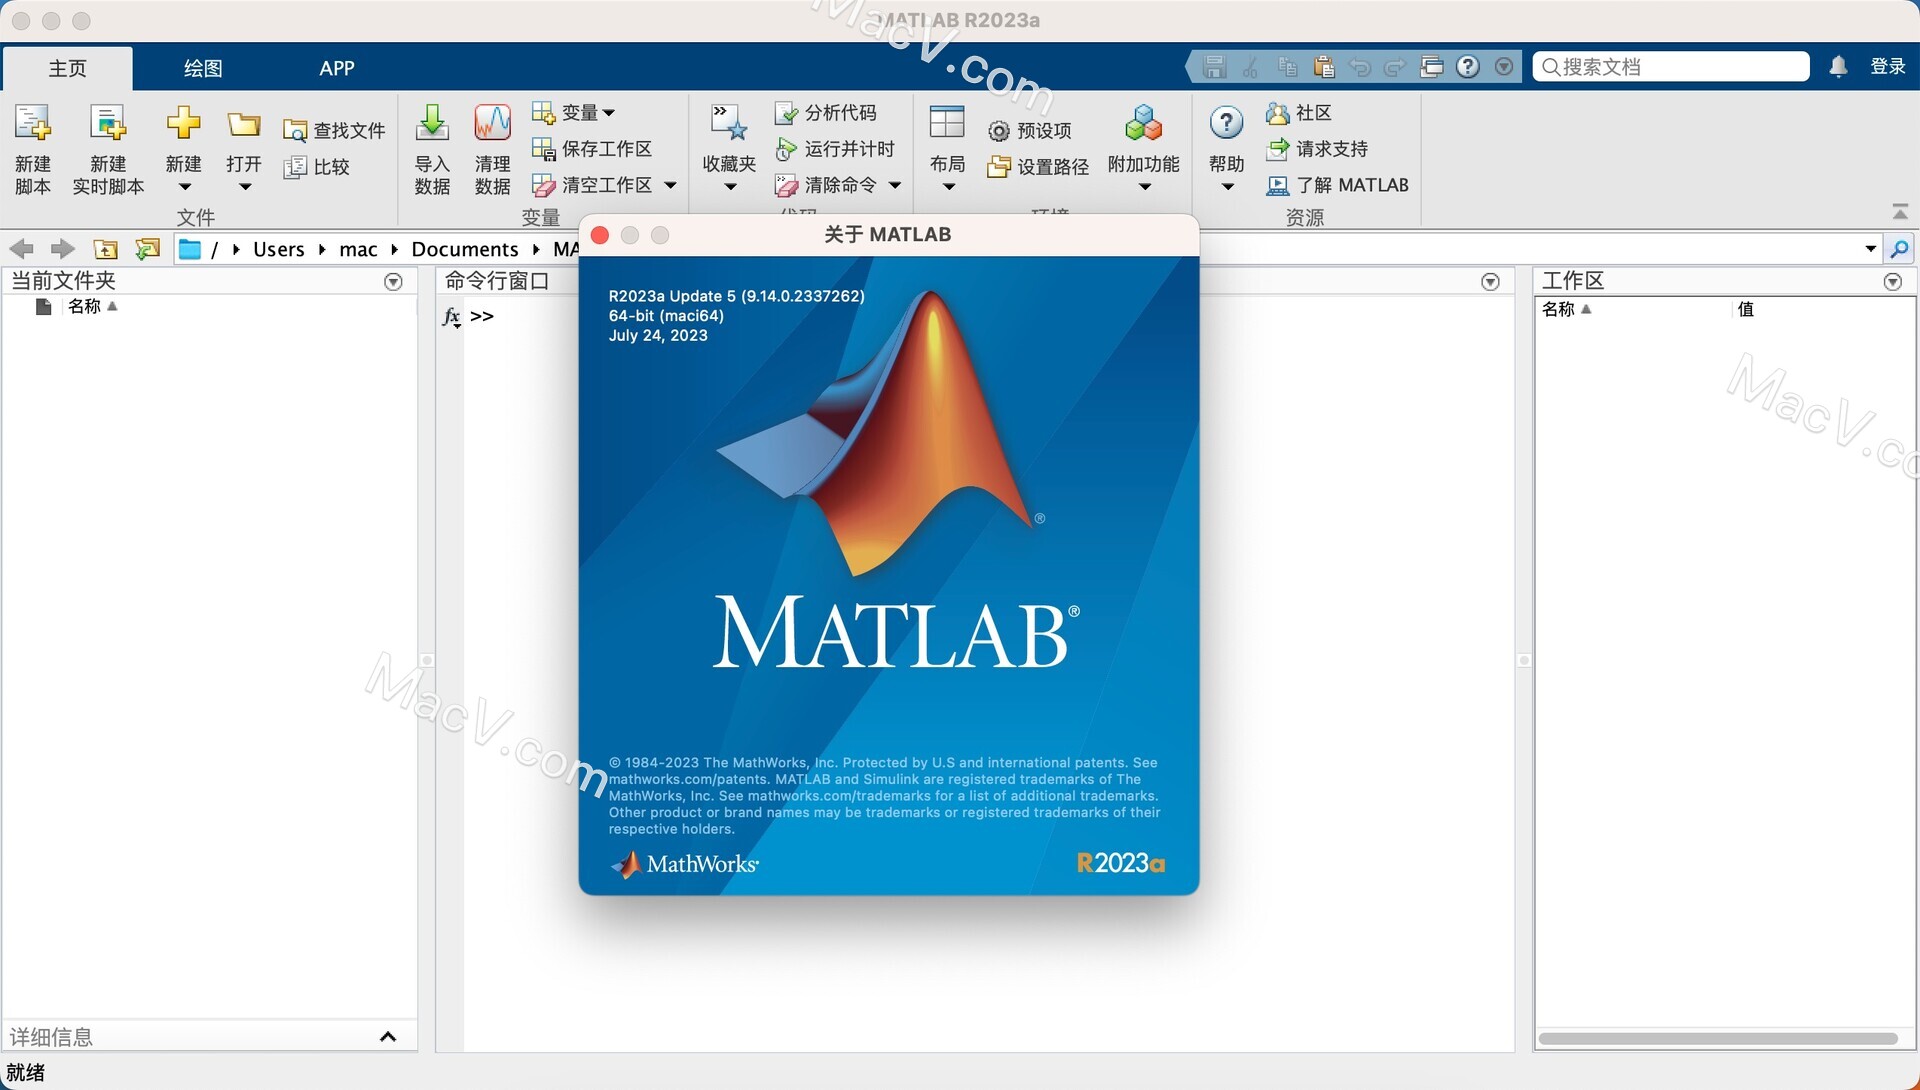 for mac download MathWorks MATLAB R2023a 9.14.0.2337262